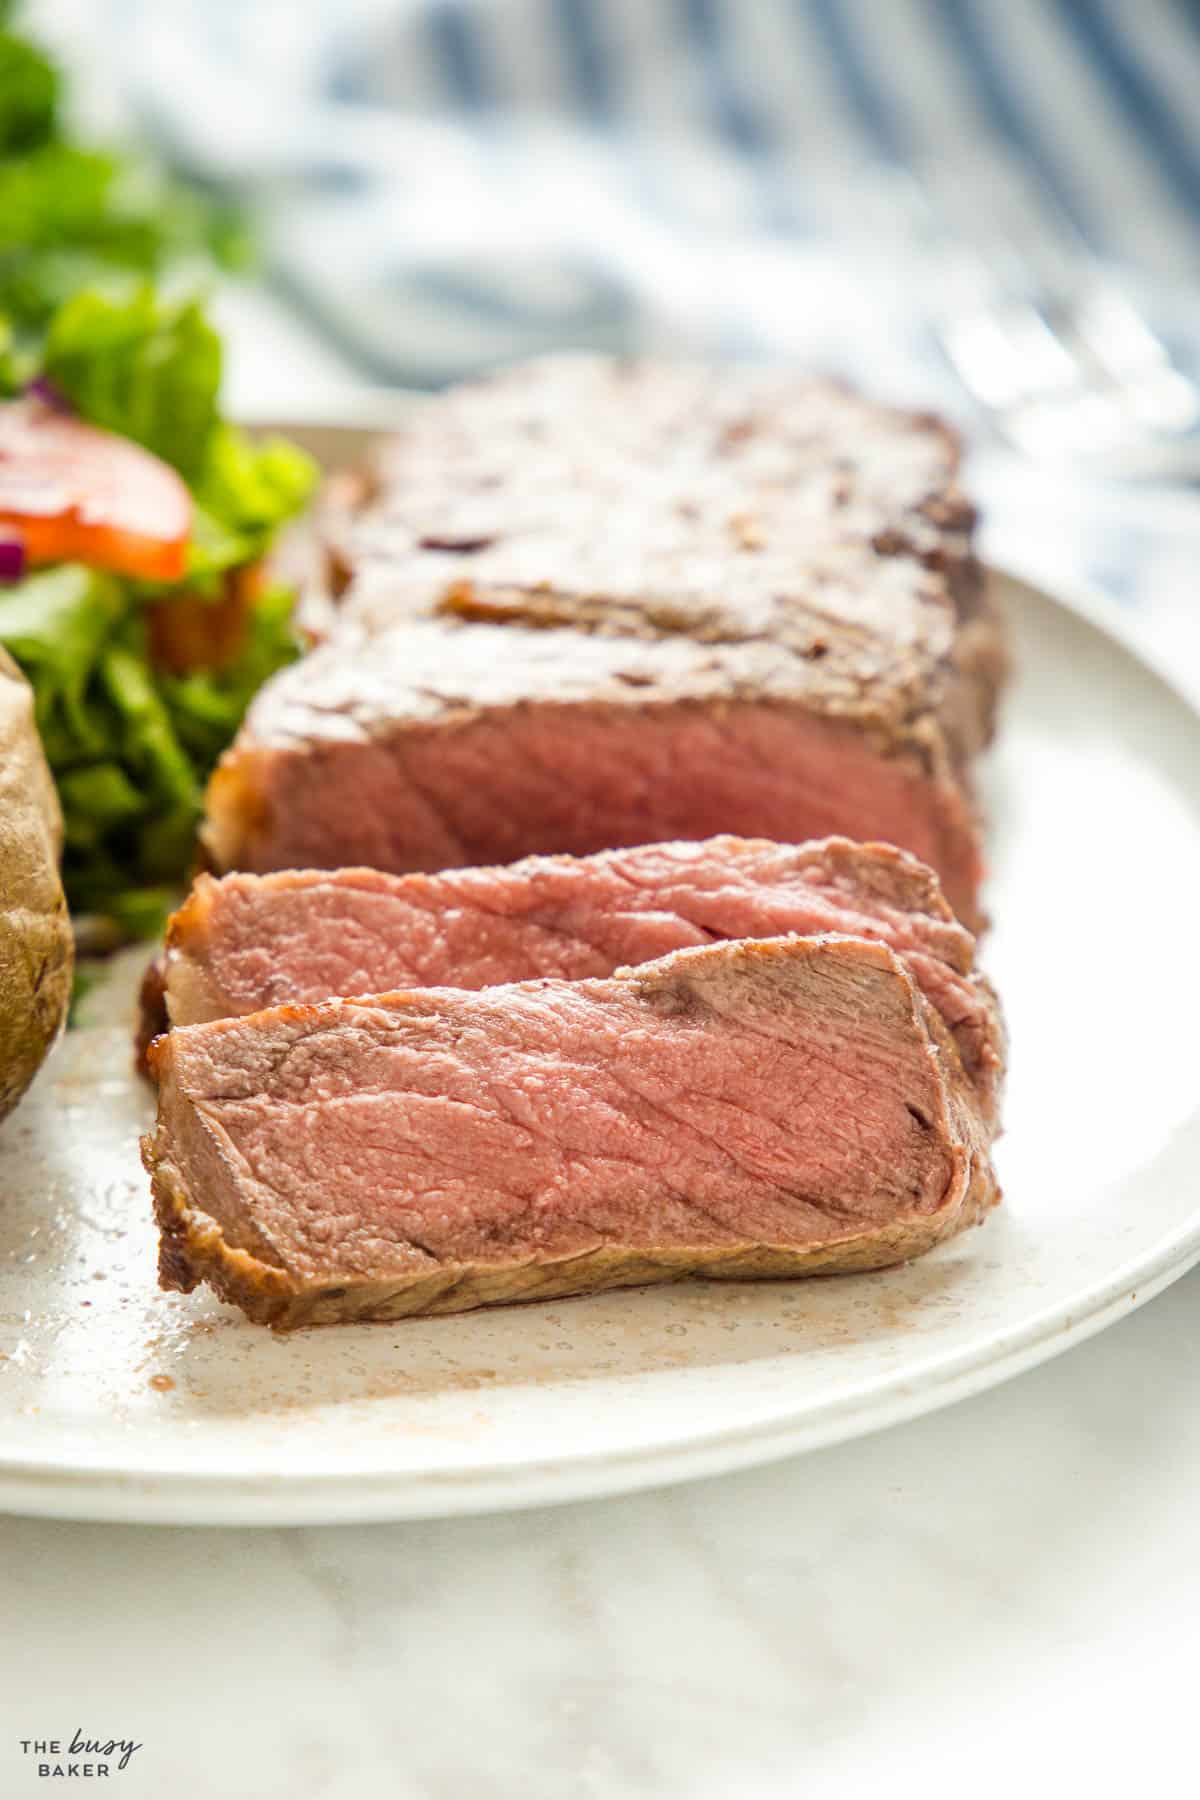 medium rare steak on white plate